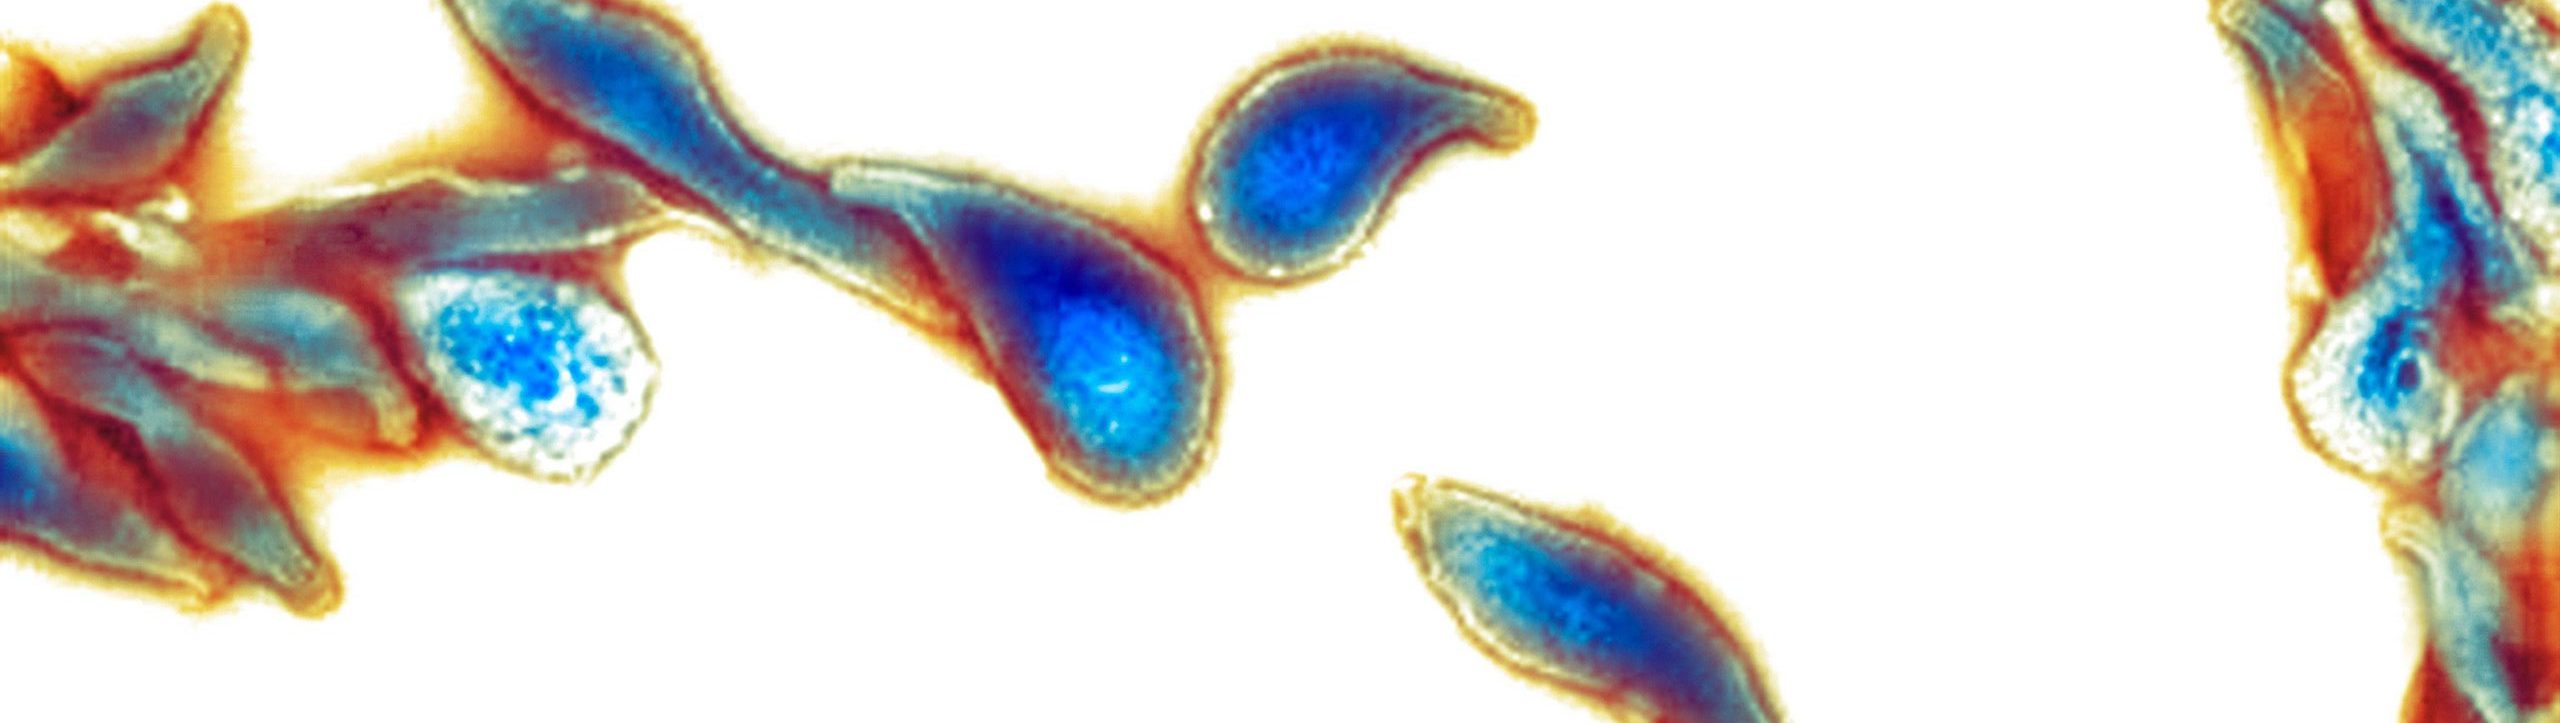 Mycoplasma genitalium bacteria, coloured transmission electron micrograph (TEM)